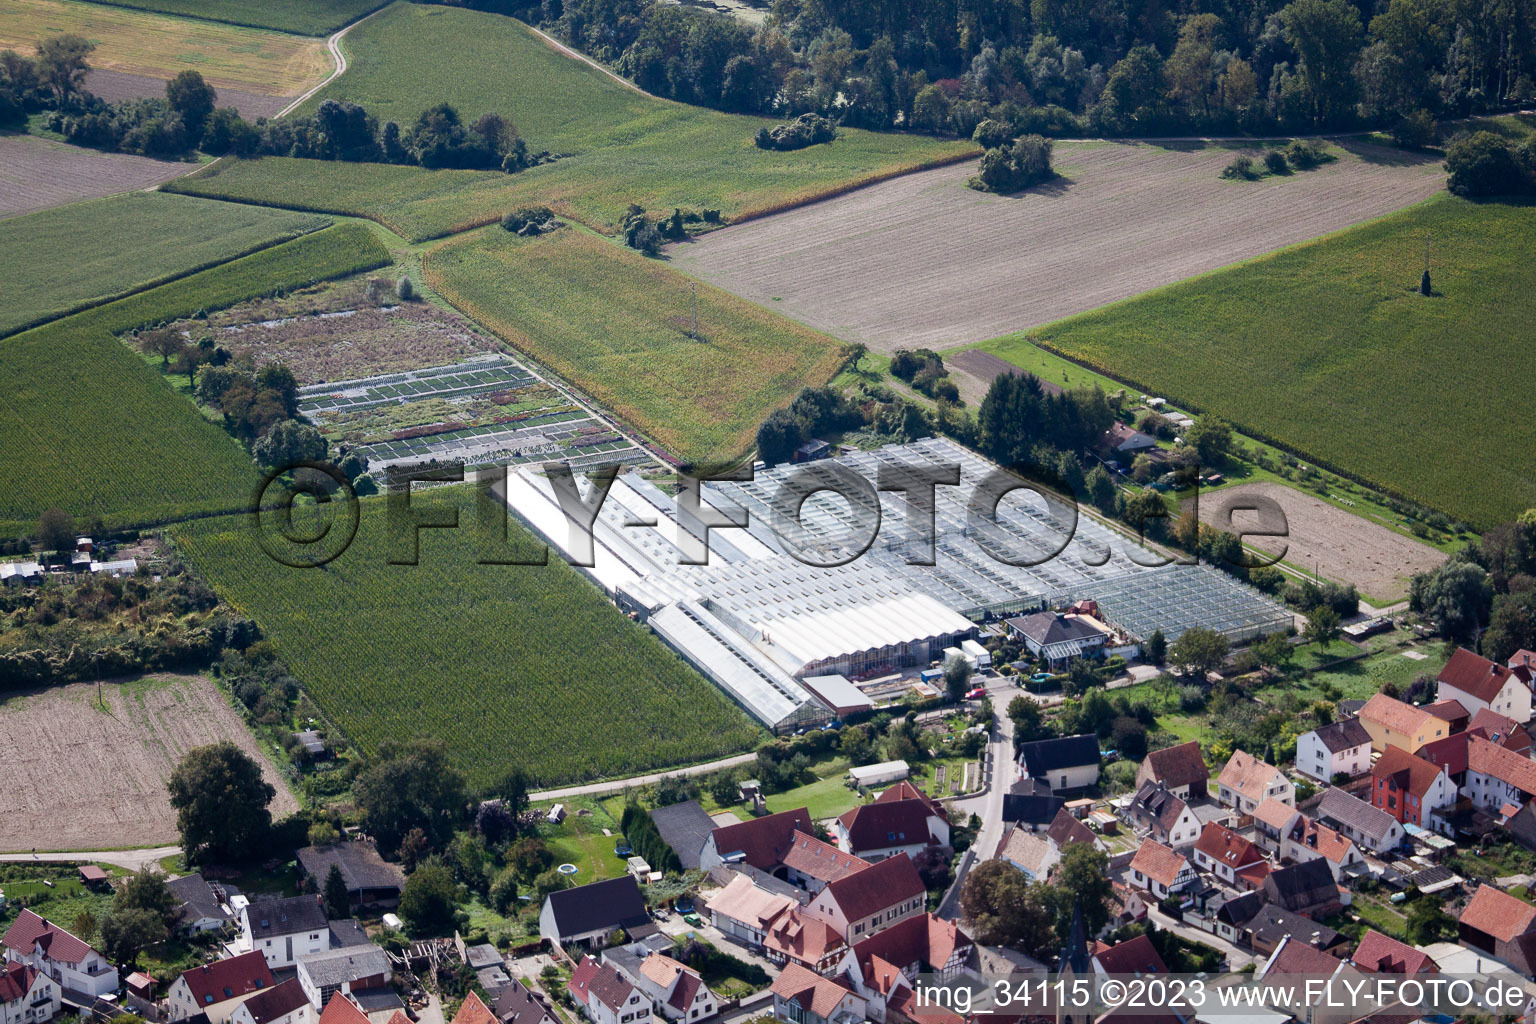 Aerial photograpy of Gardening on Ziegelstr in the district Sondernheim in Germersheim in the state Rhineland-Palatinate, Germany